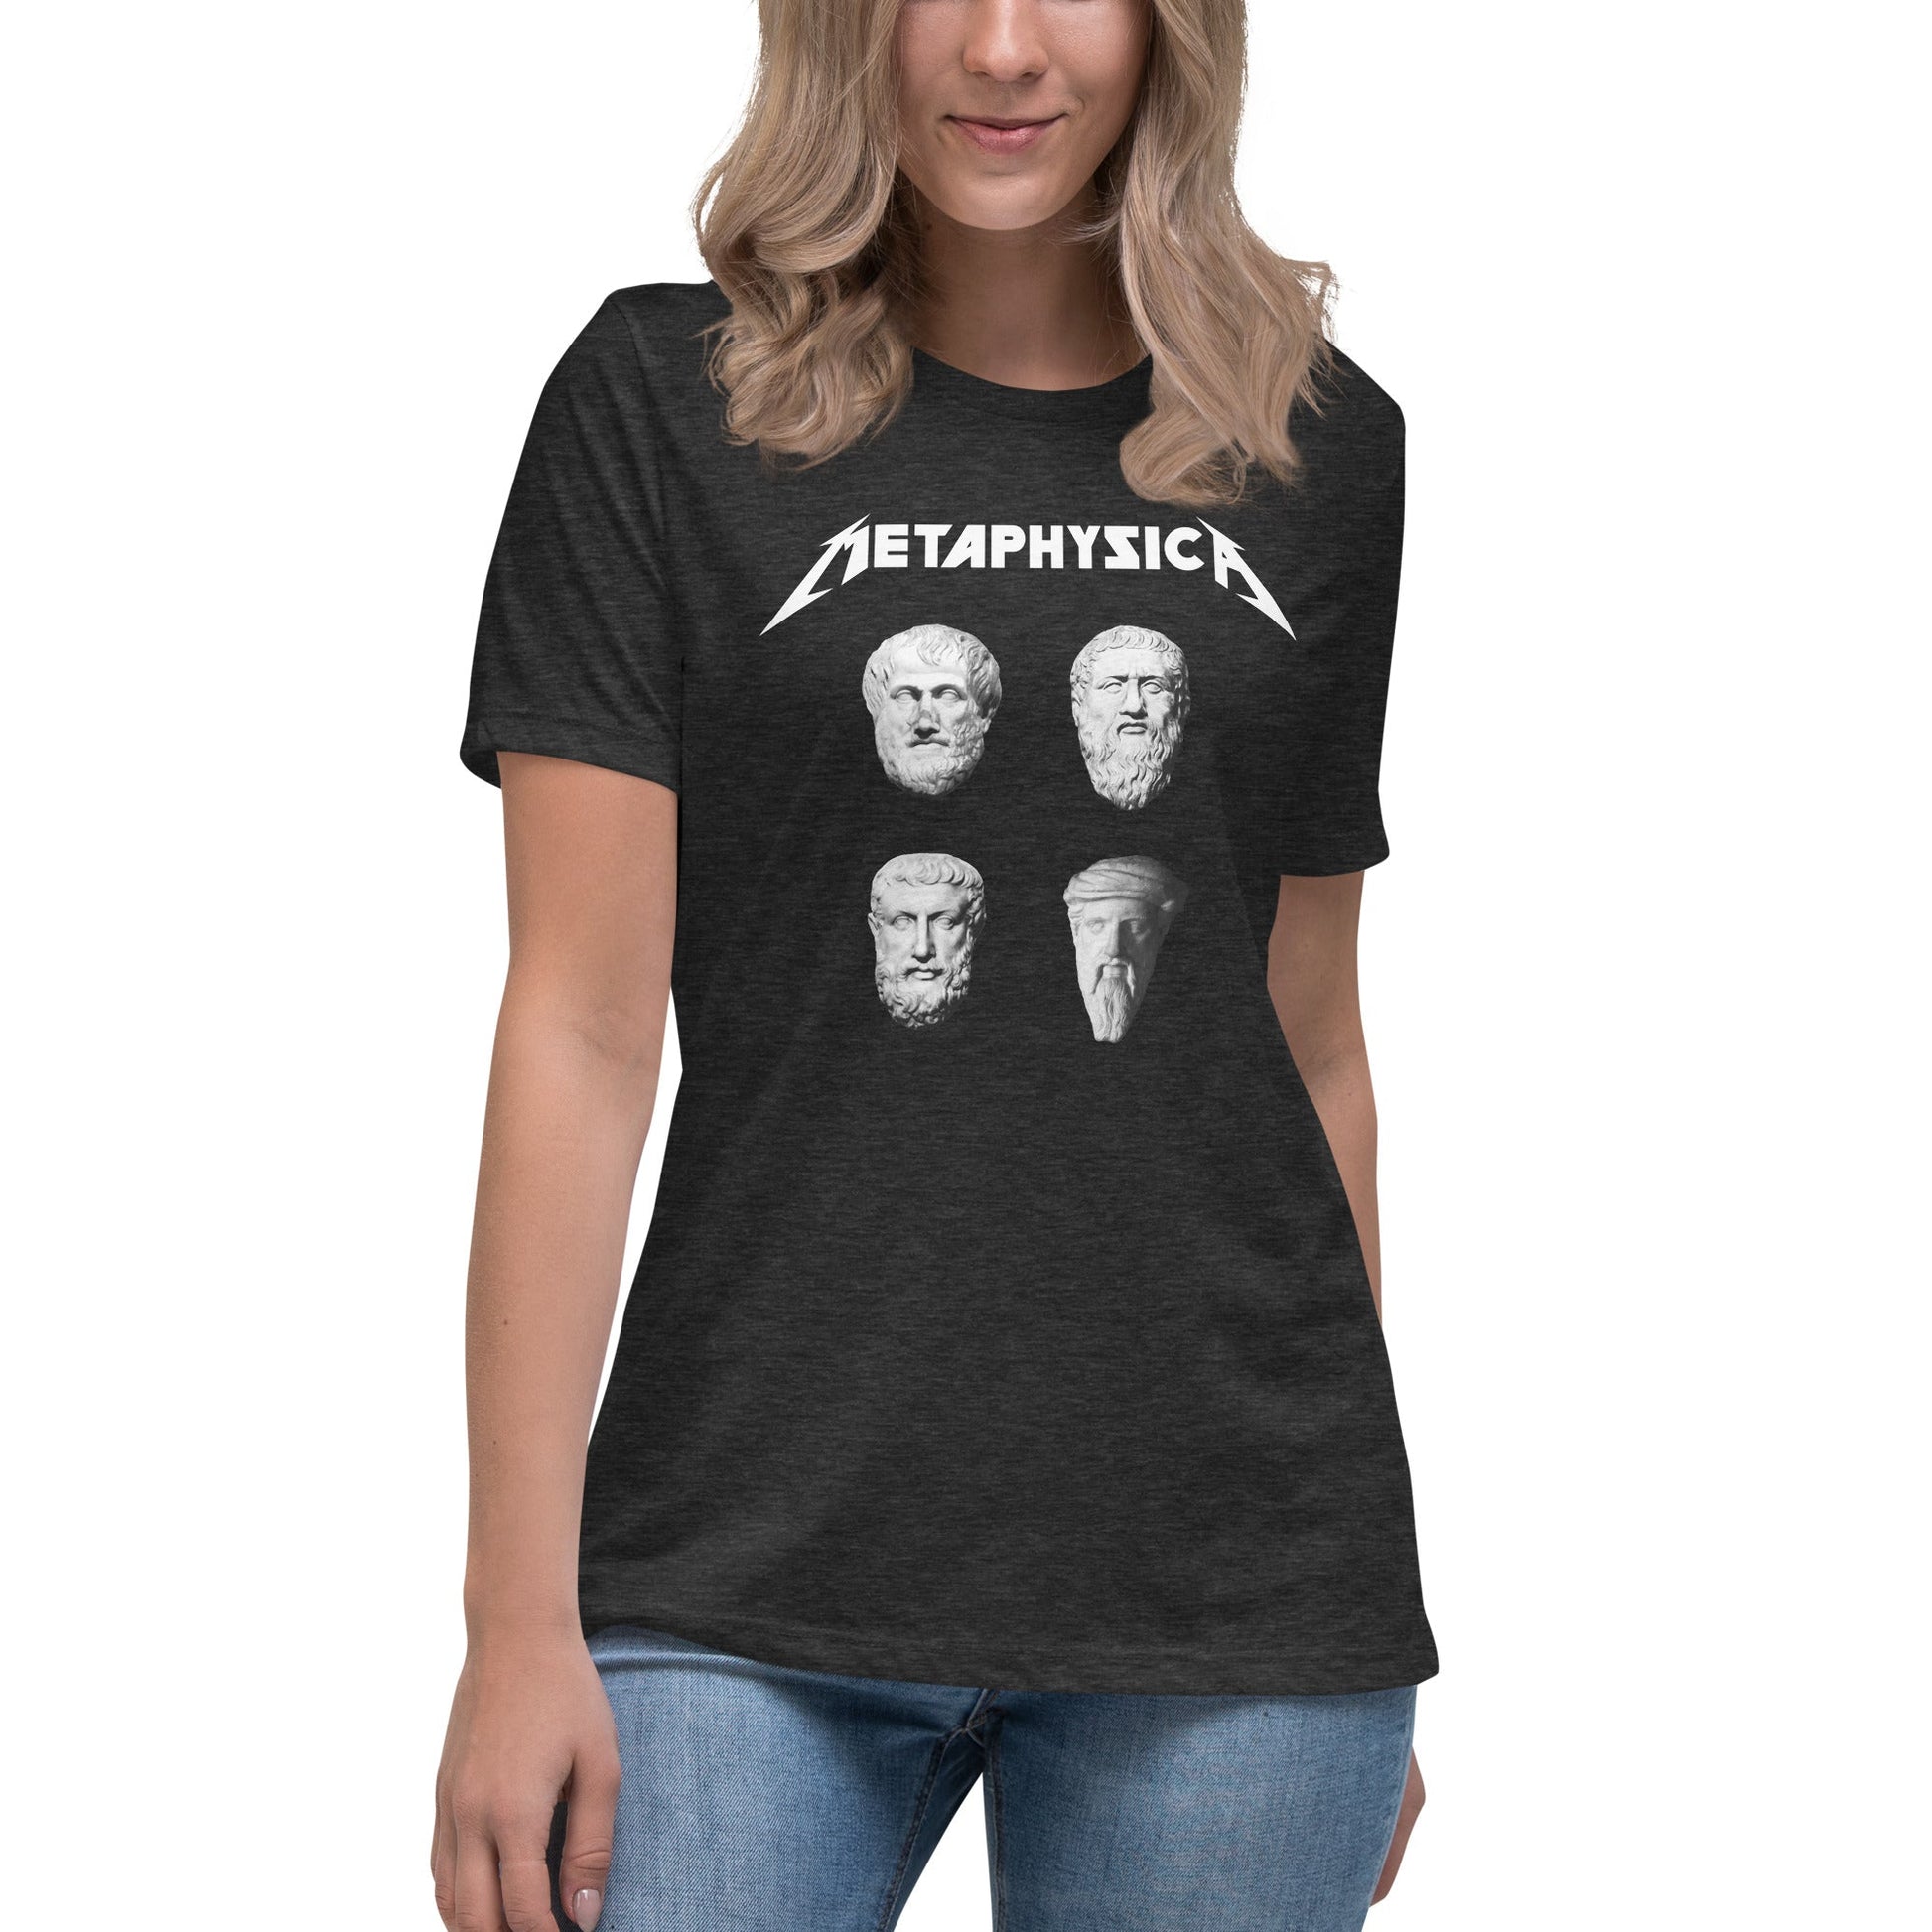 Metaphysica - The Four Wise Men - Women's T-Shirt